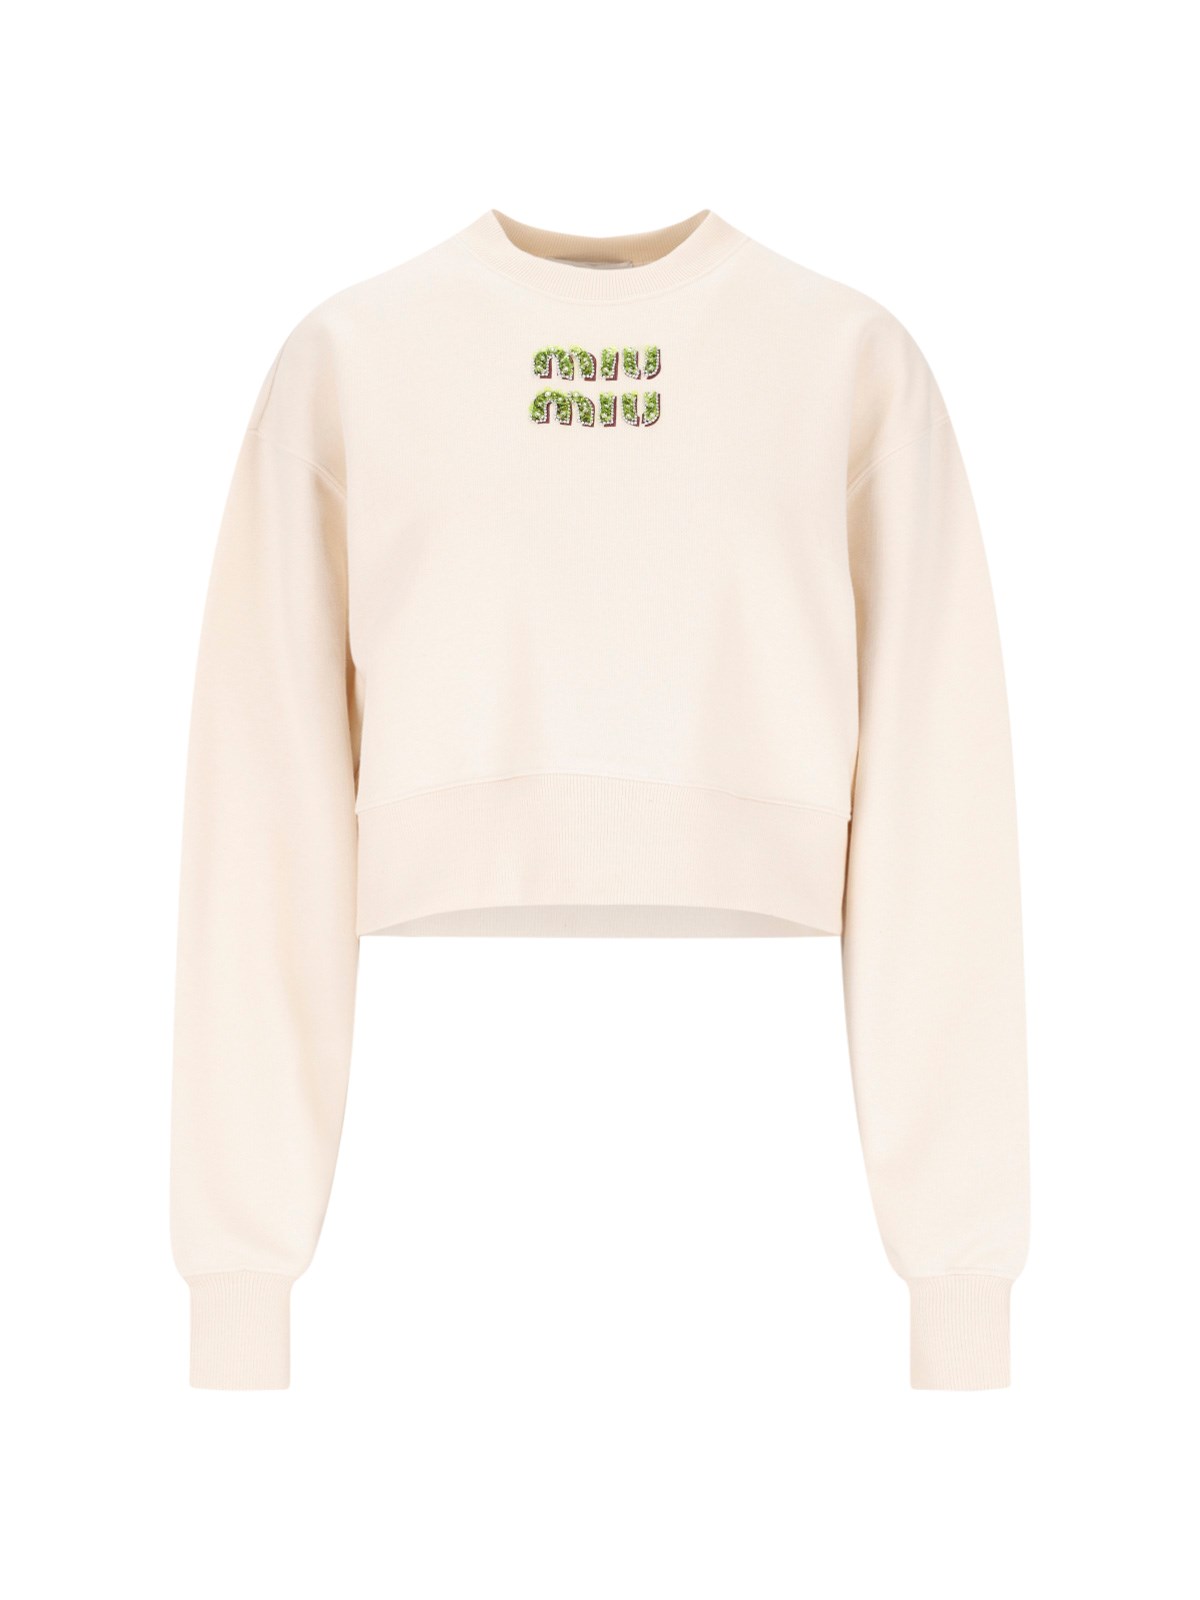 Miu Miu Logo Cropped Sweatshirt In Cream